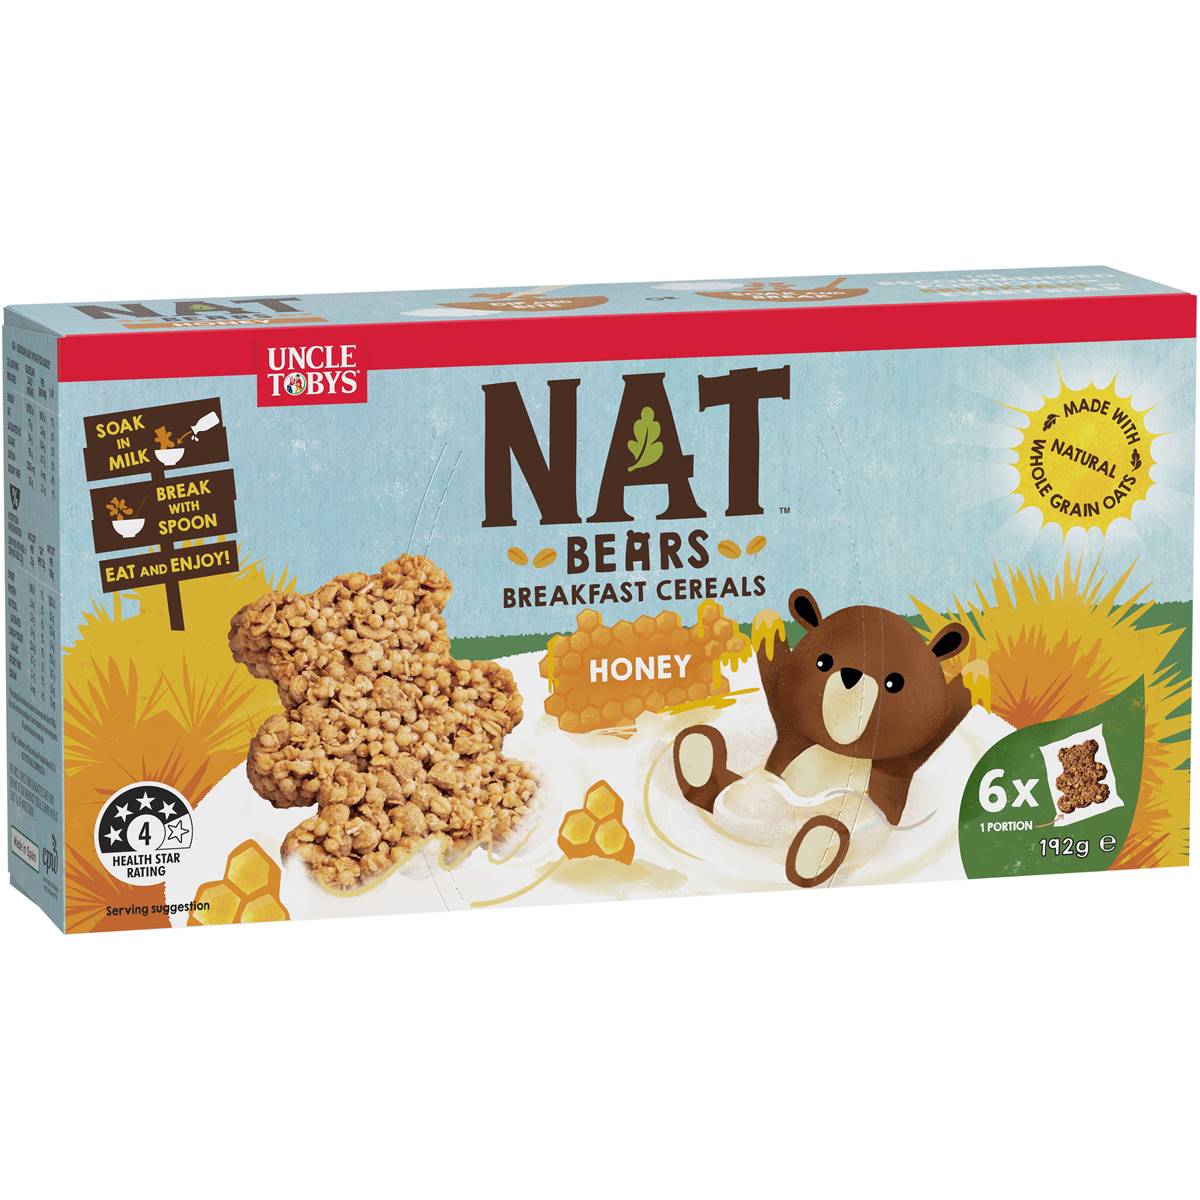 Calories in Uncle Tobys Nat Bears Breakfast Cereals Honey